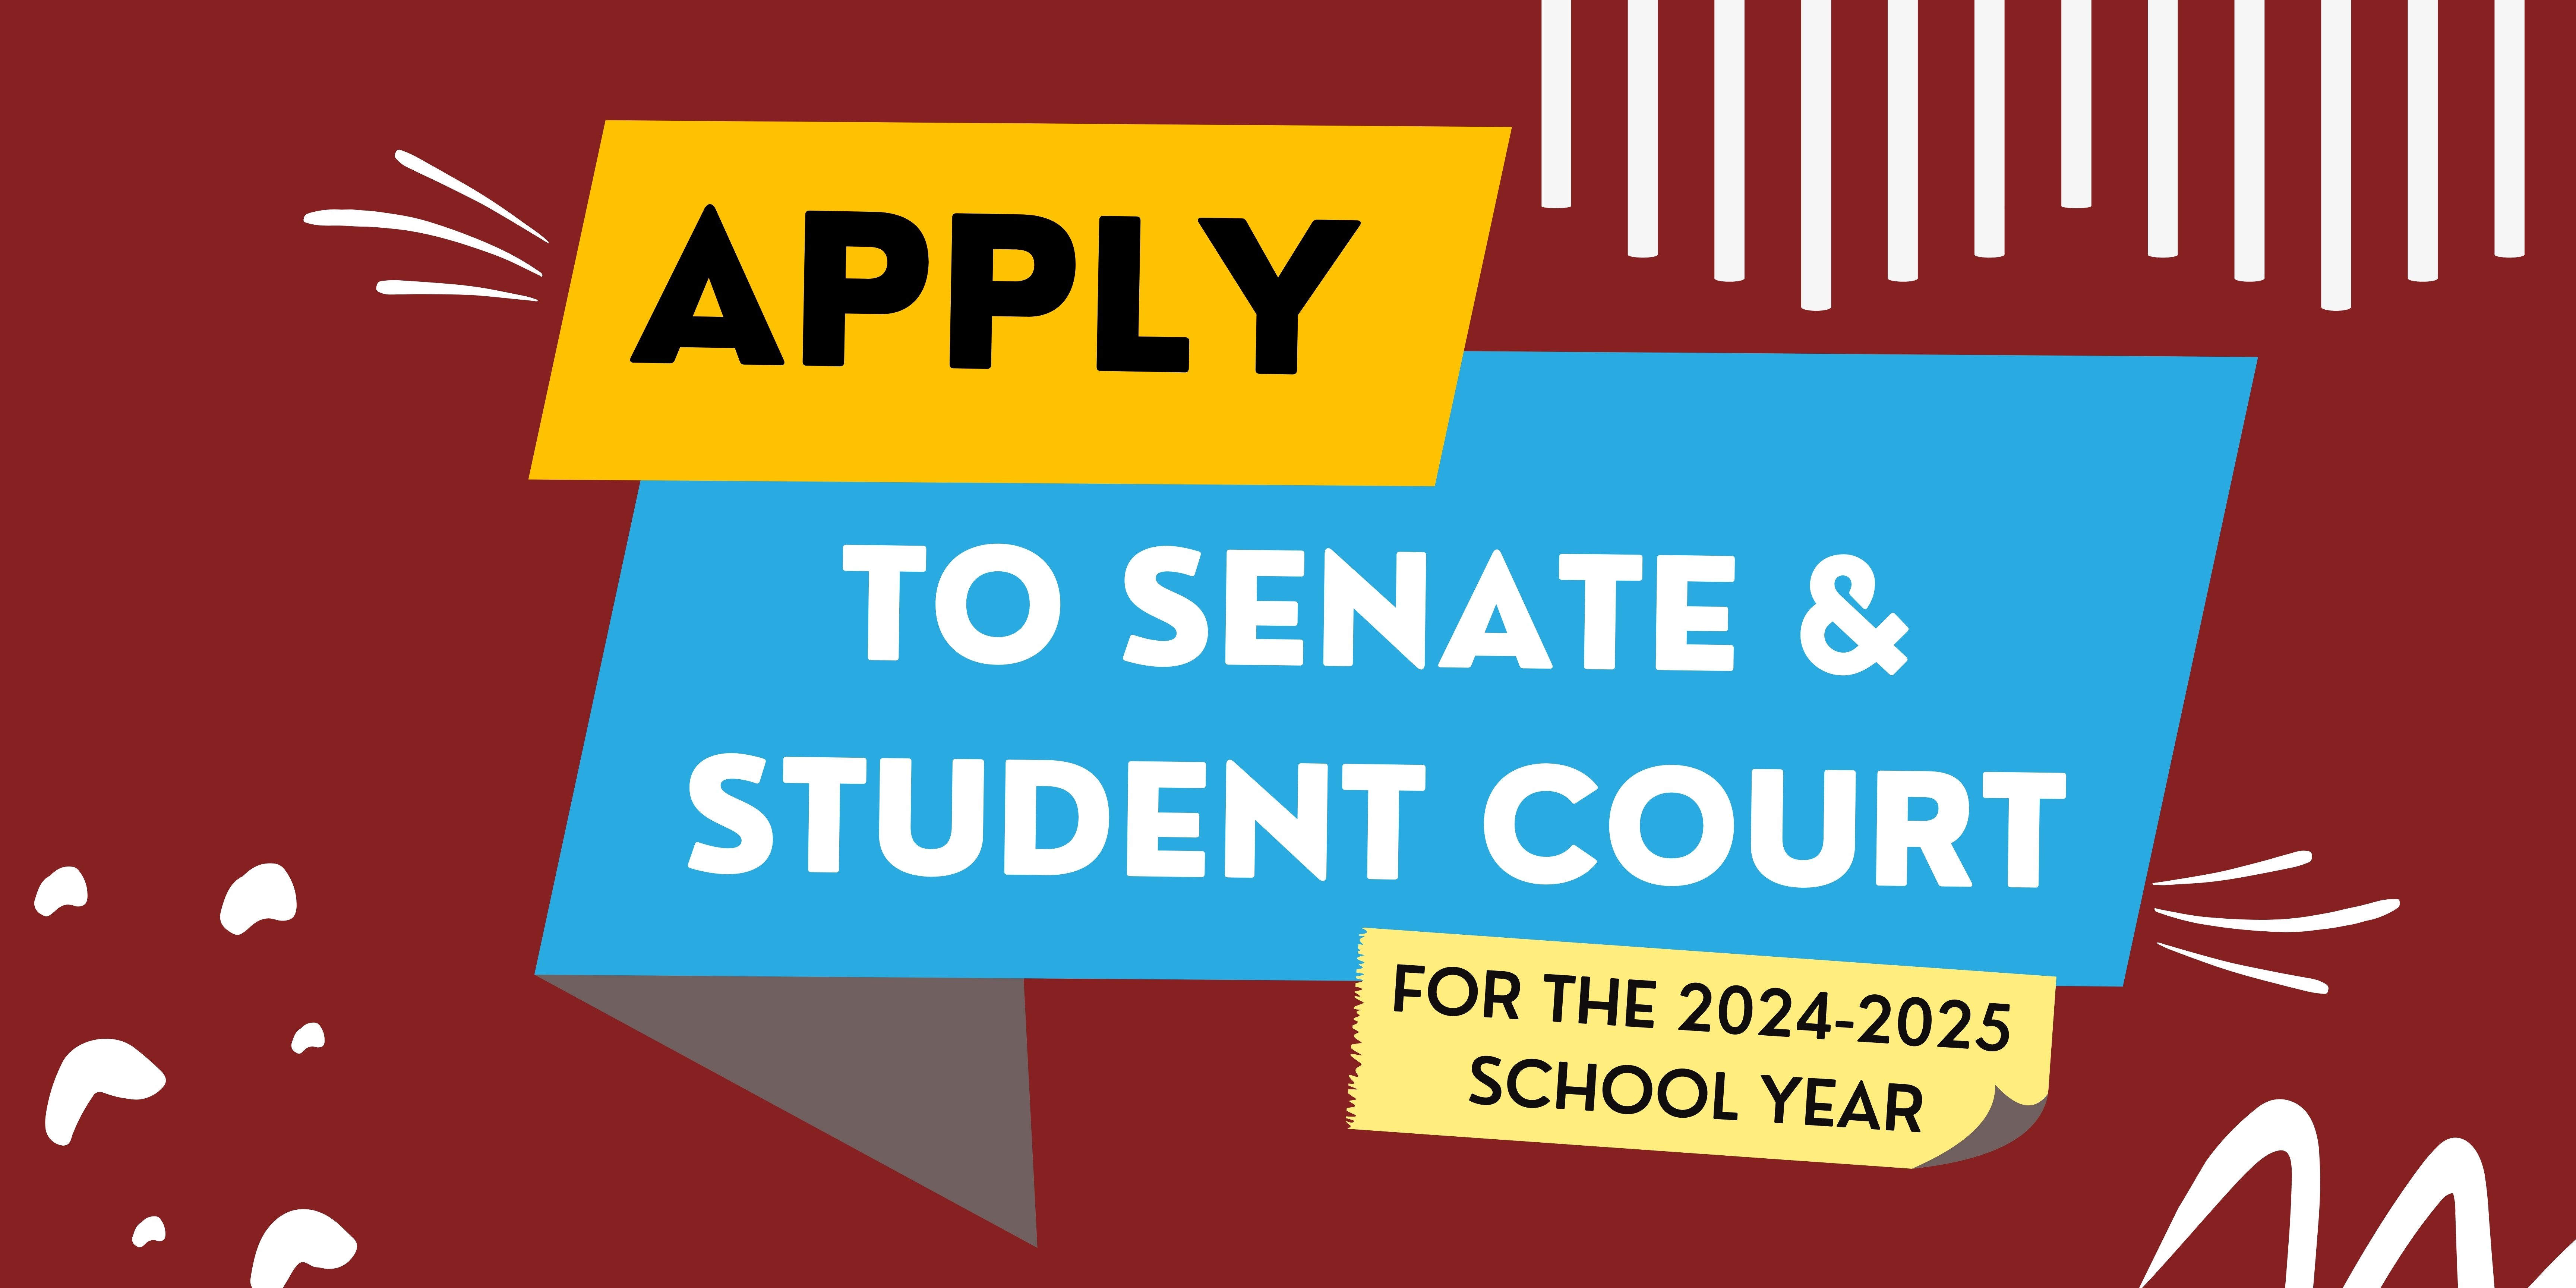 Apply for Senate & Student Court